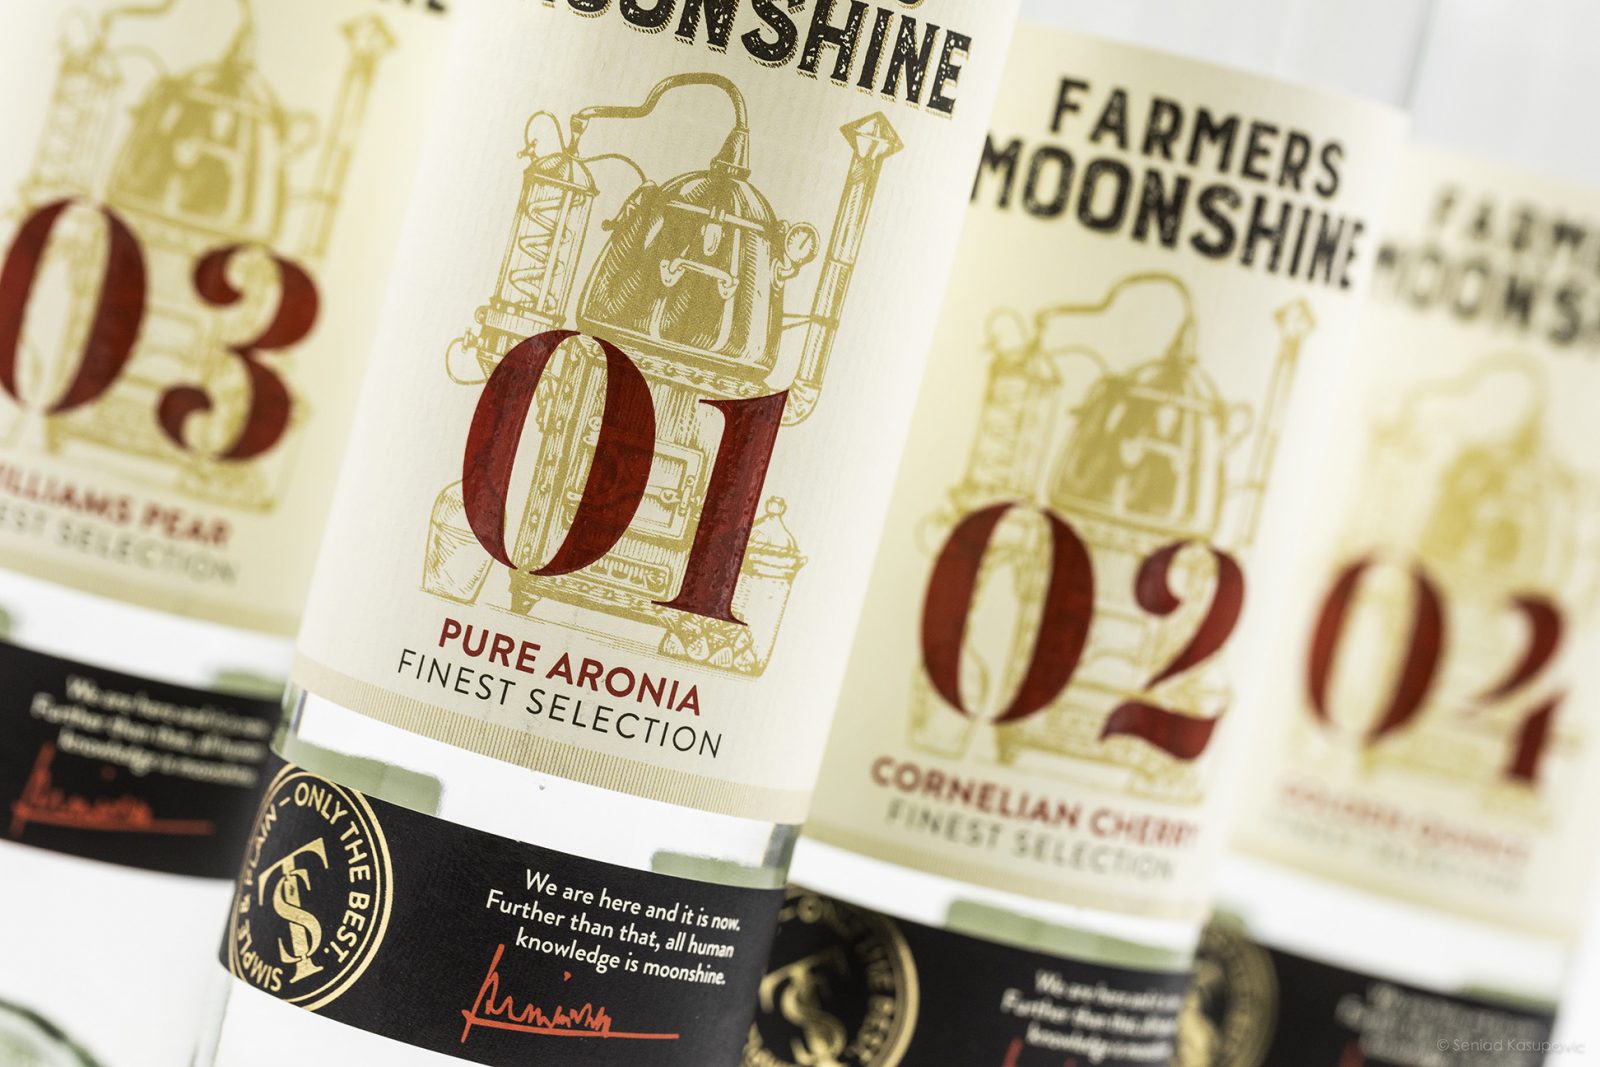 Packaging for Farmers Moonshine Brandy